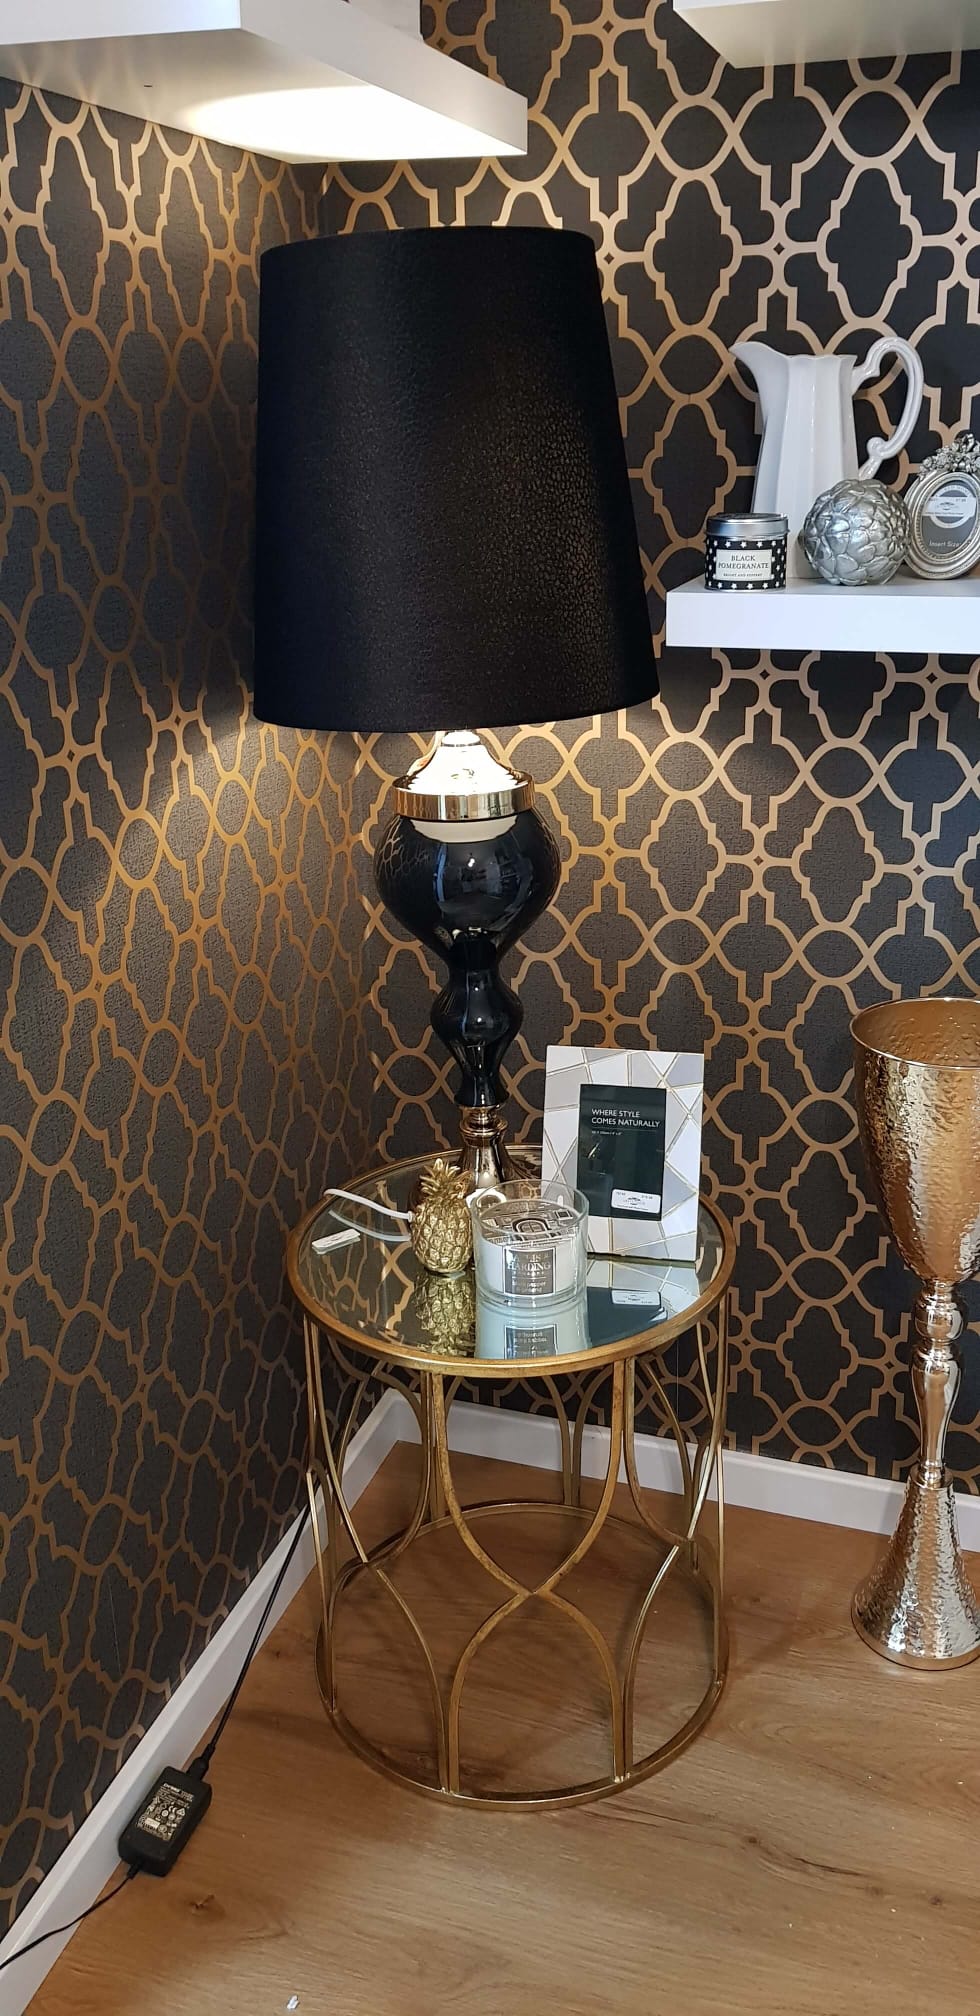 Black & Gold Table Lamp